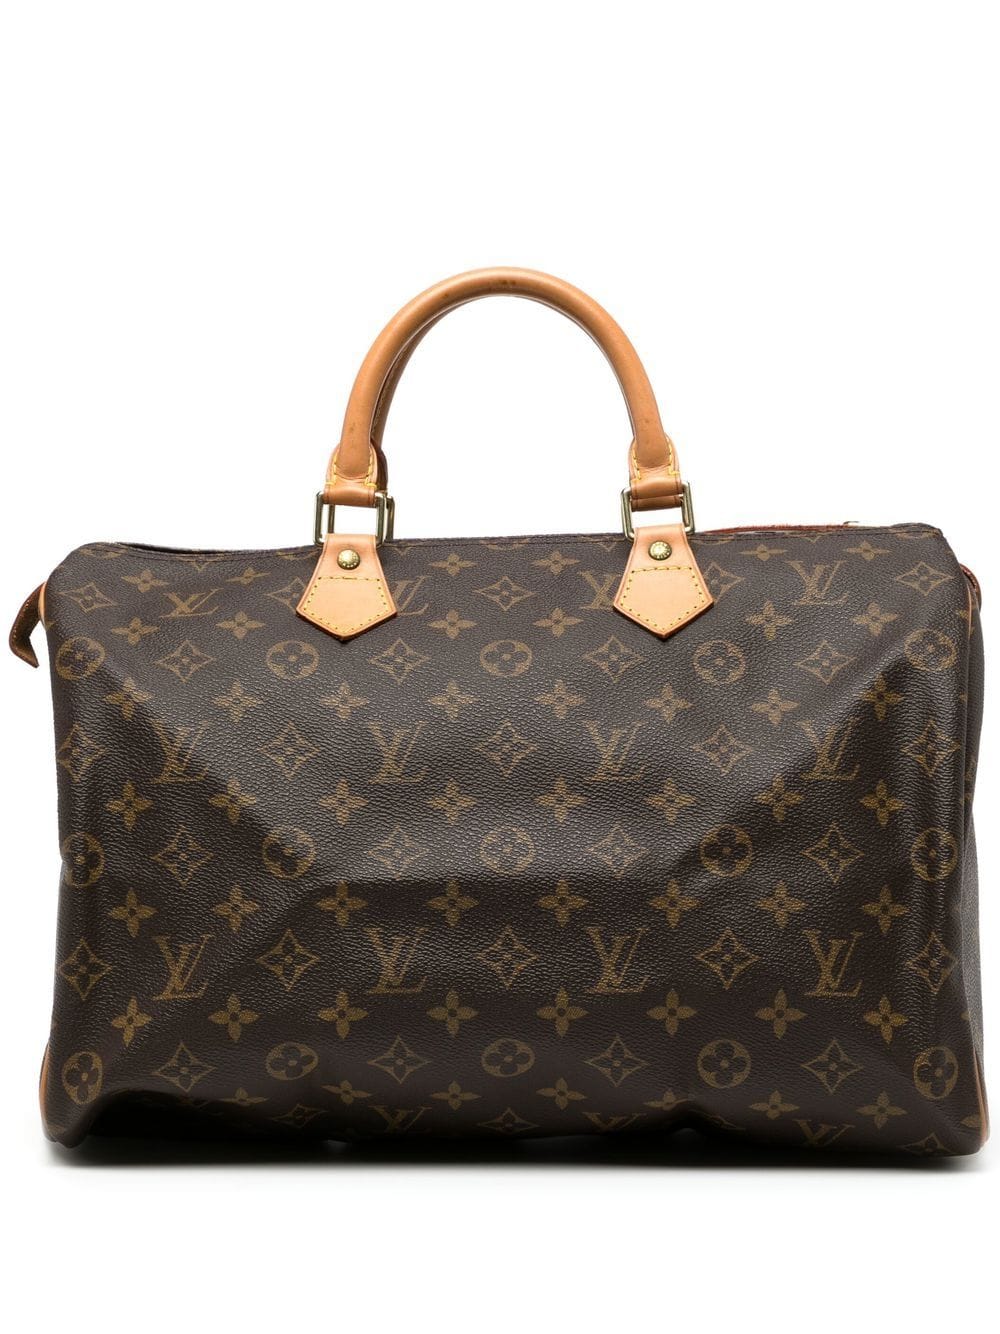 Rent Louis Vuitton Handbags Jewelry  Sunglasses  Bag Borrow or Steal